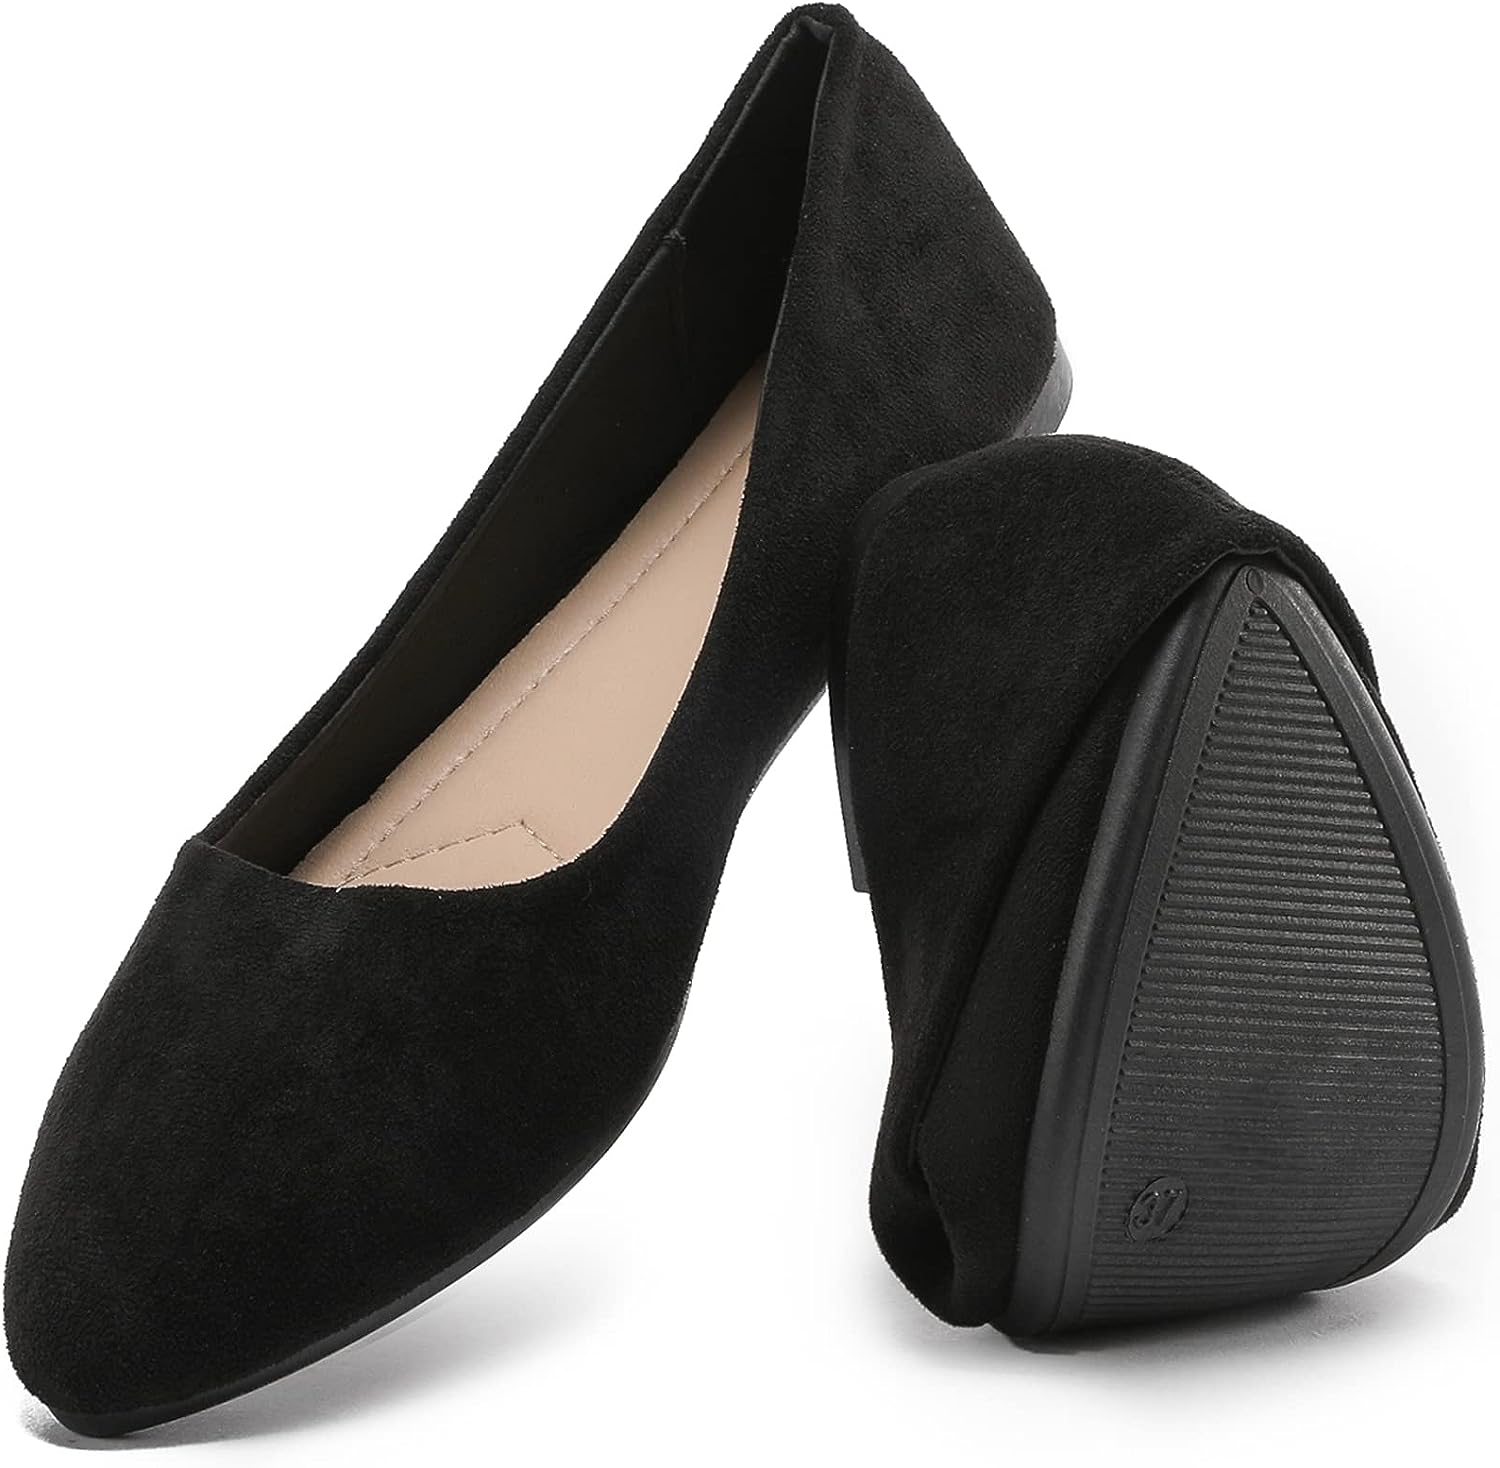 HEAWISH Women’s Black Flats Shoes Comfortable Suede [...]